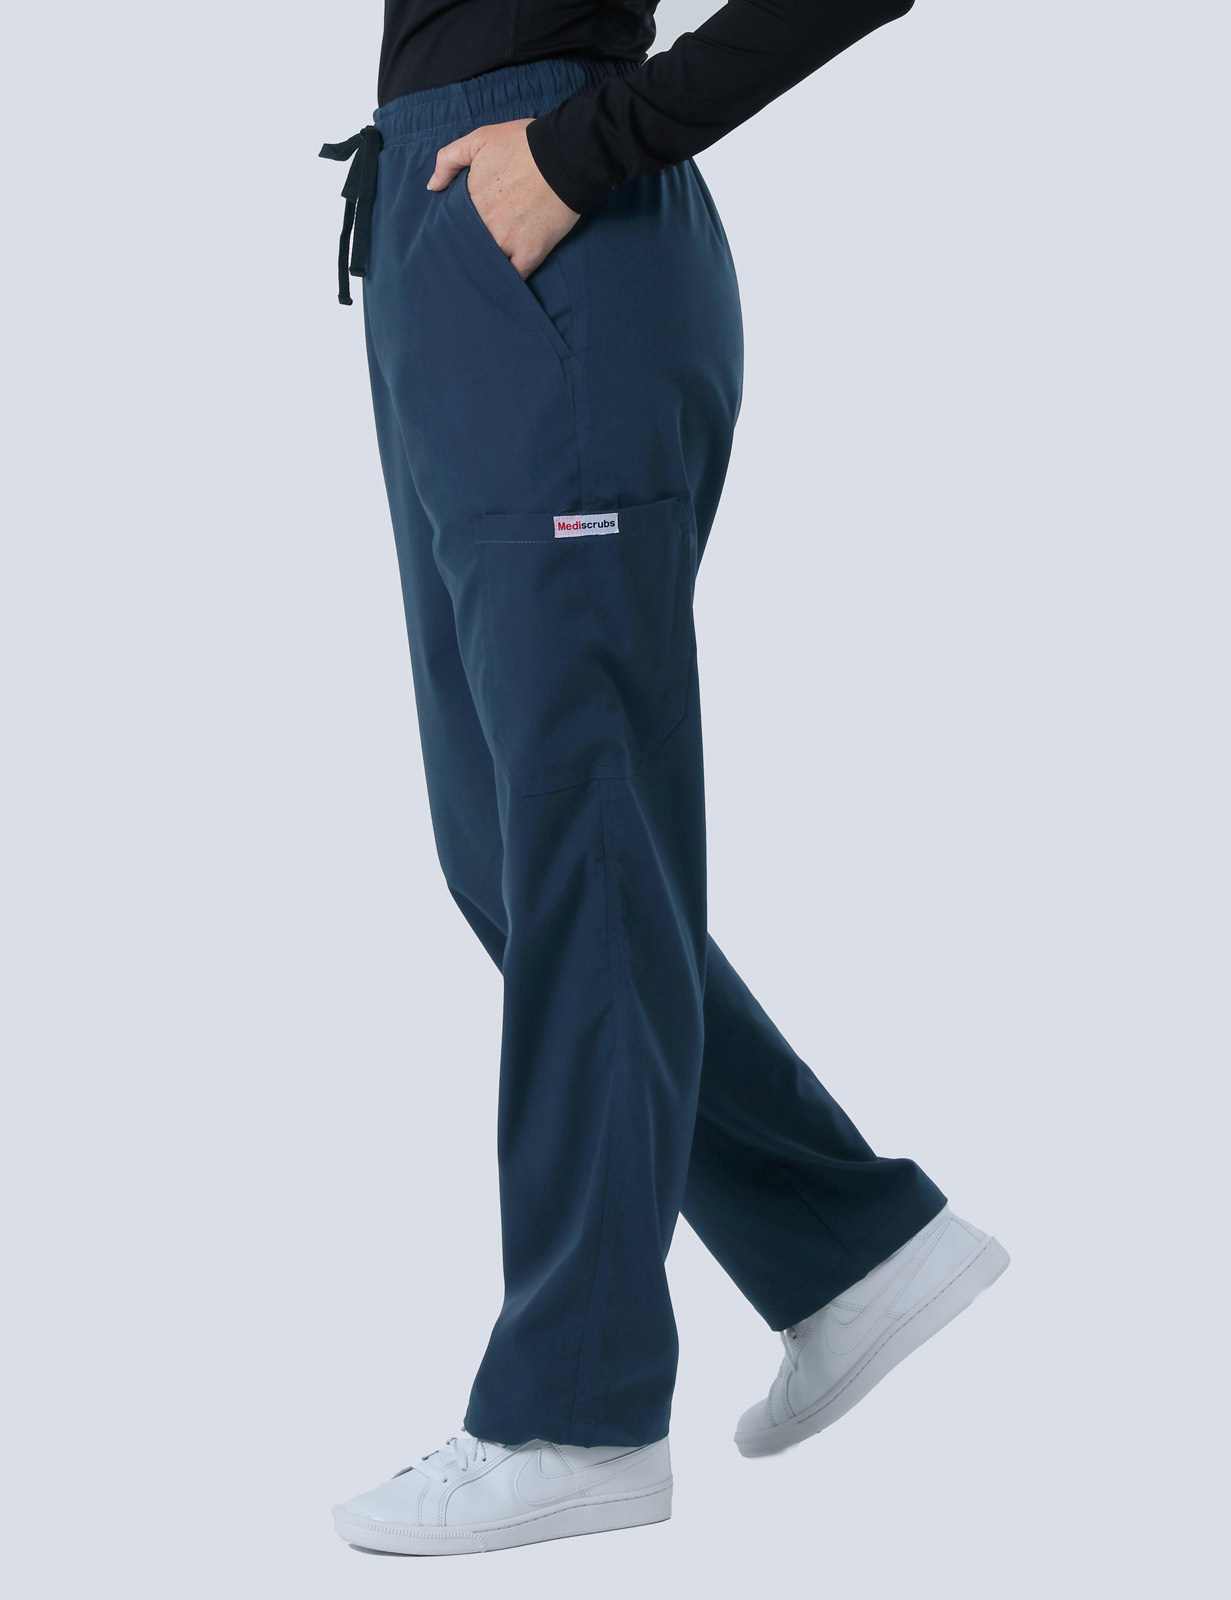 PAH - Endoscopy Doctor (4 Pocket Scrub Top and Cargo Pants in Navy incl Logos)